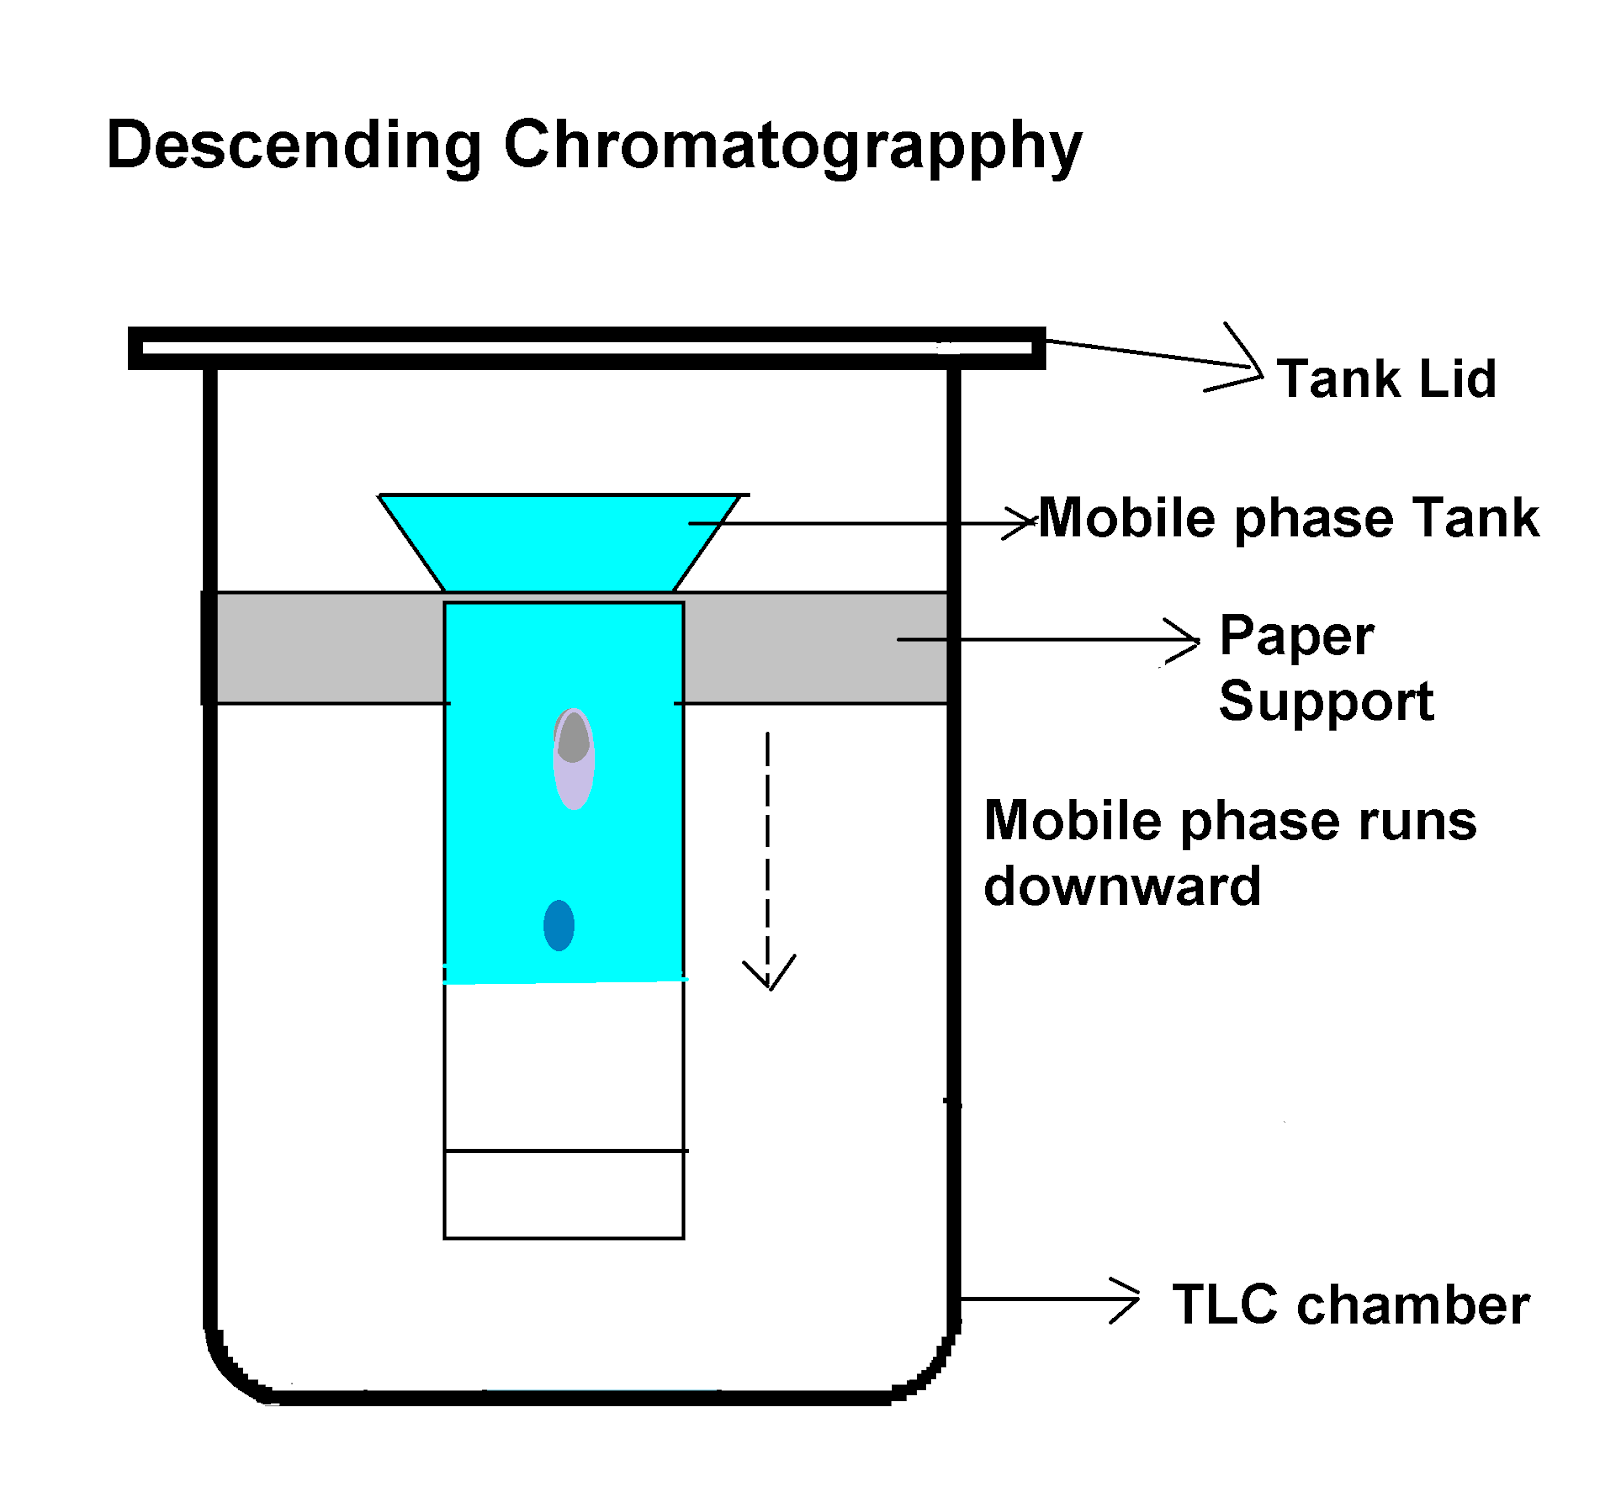 Chromatography Diagram Labeled